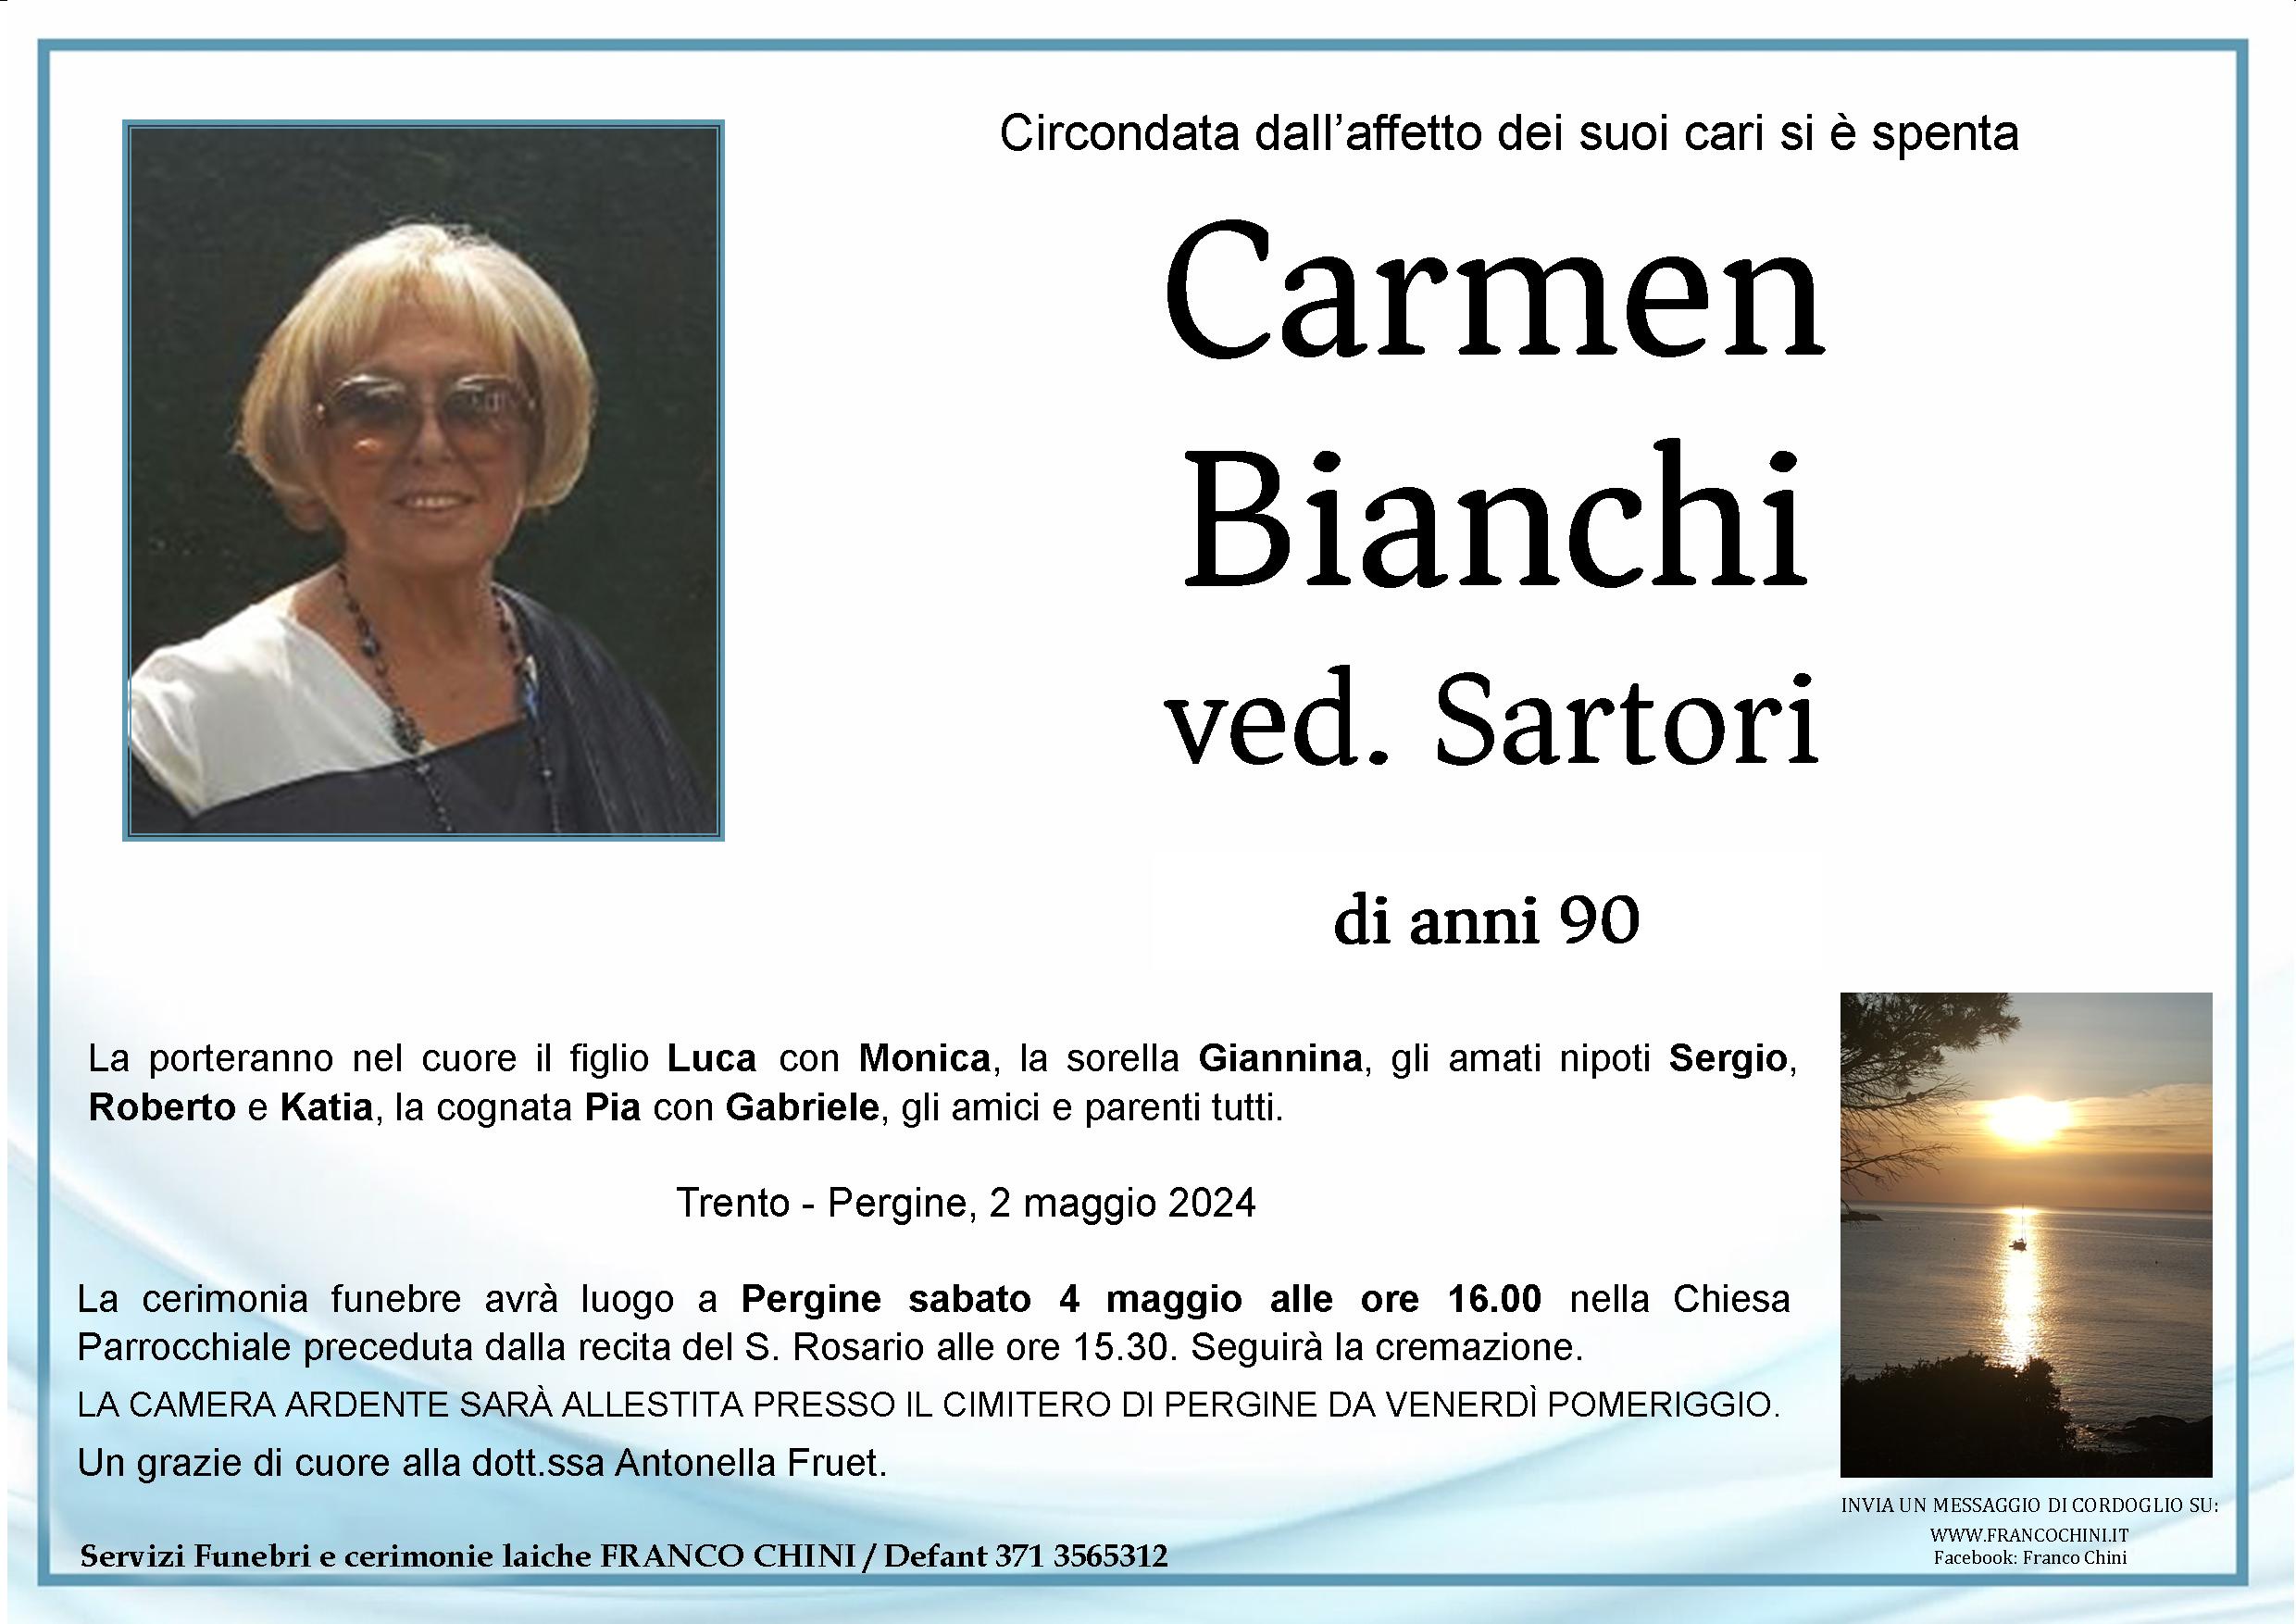 Carmen Bianchi